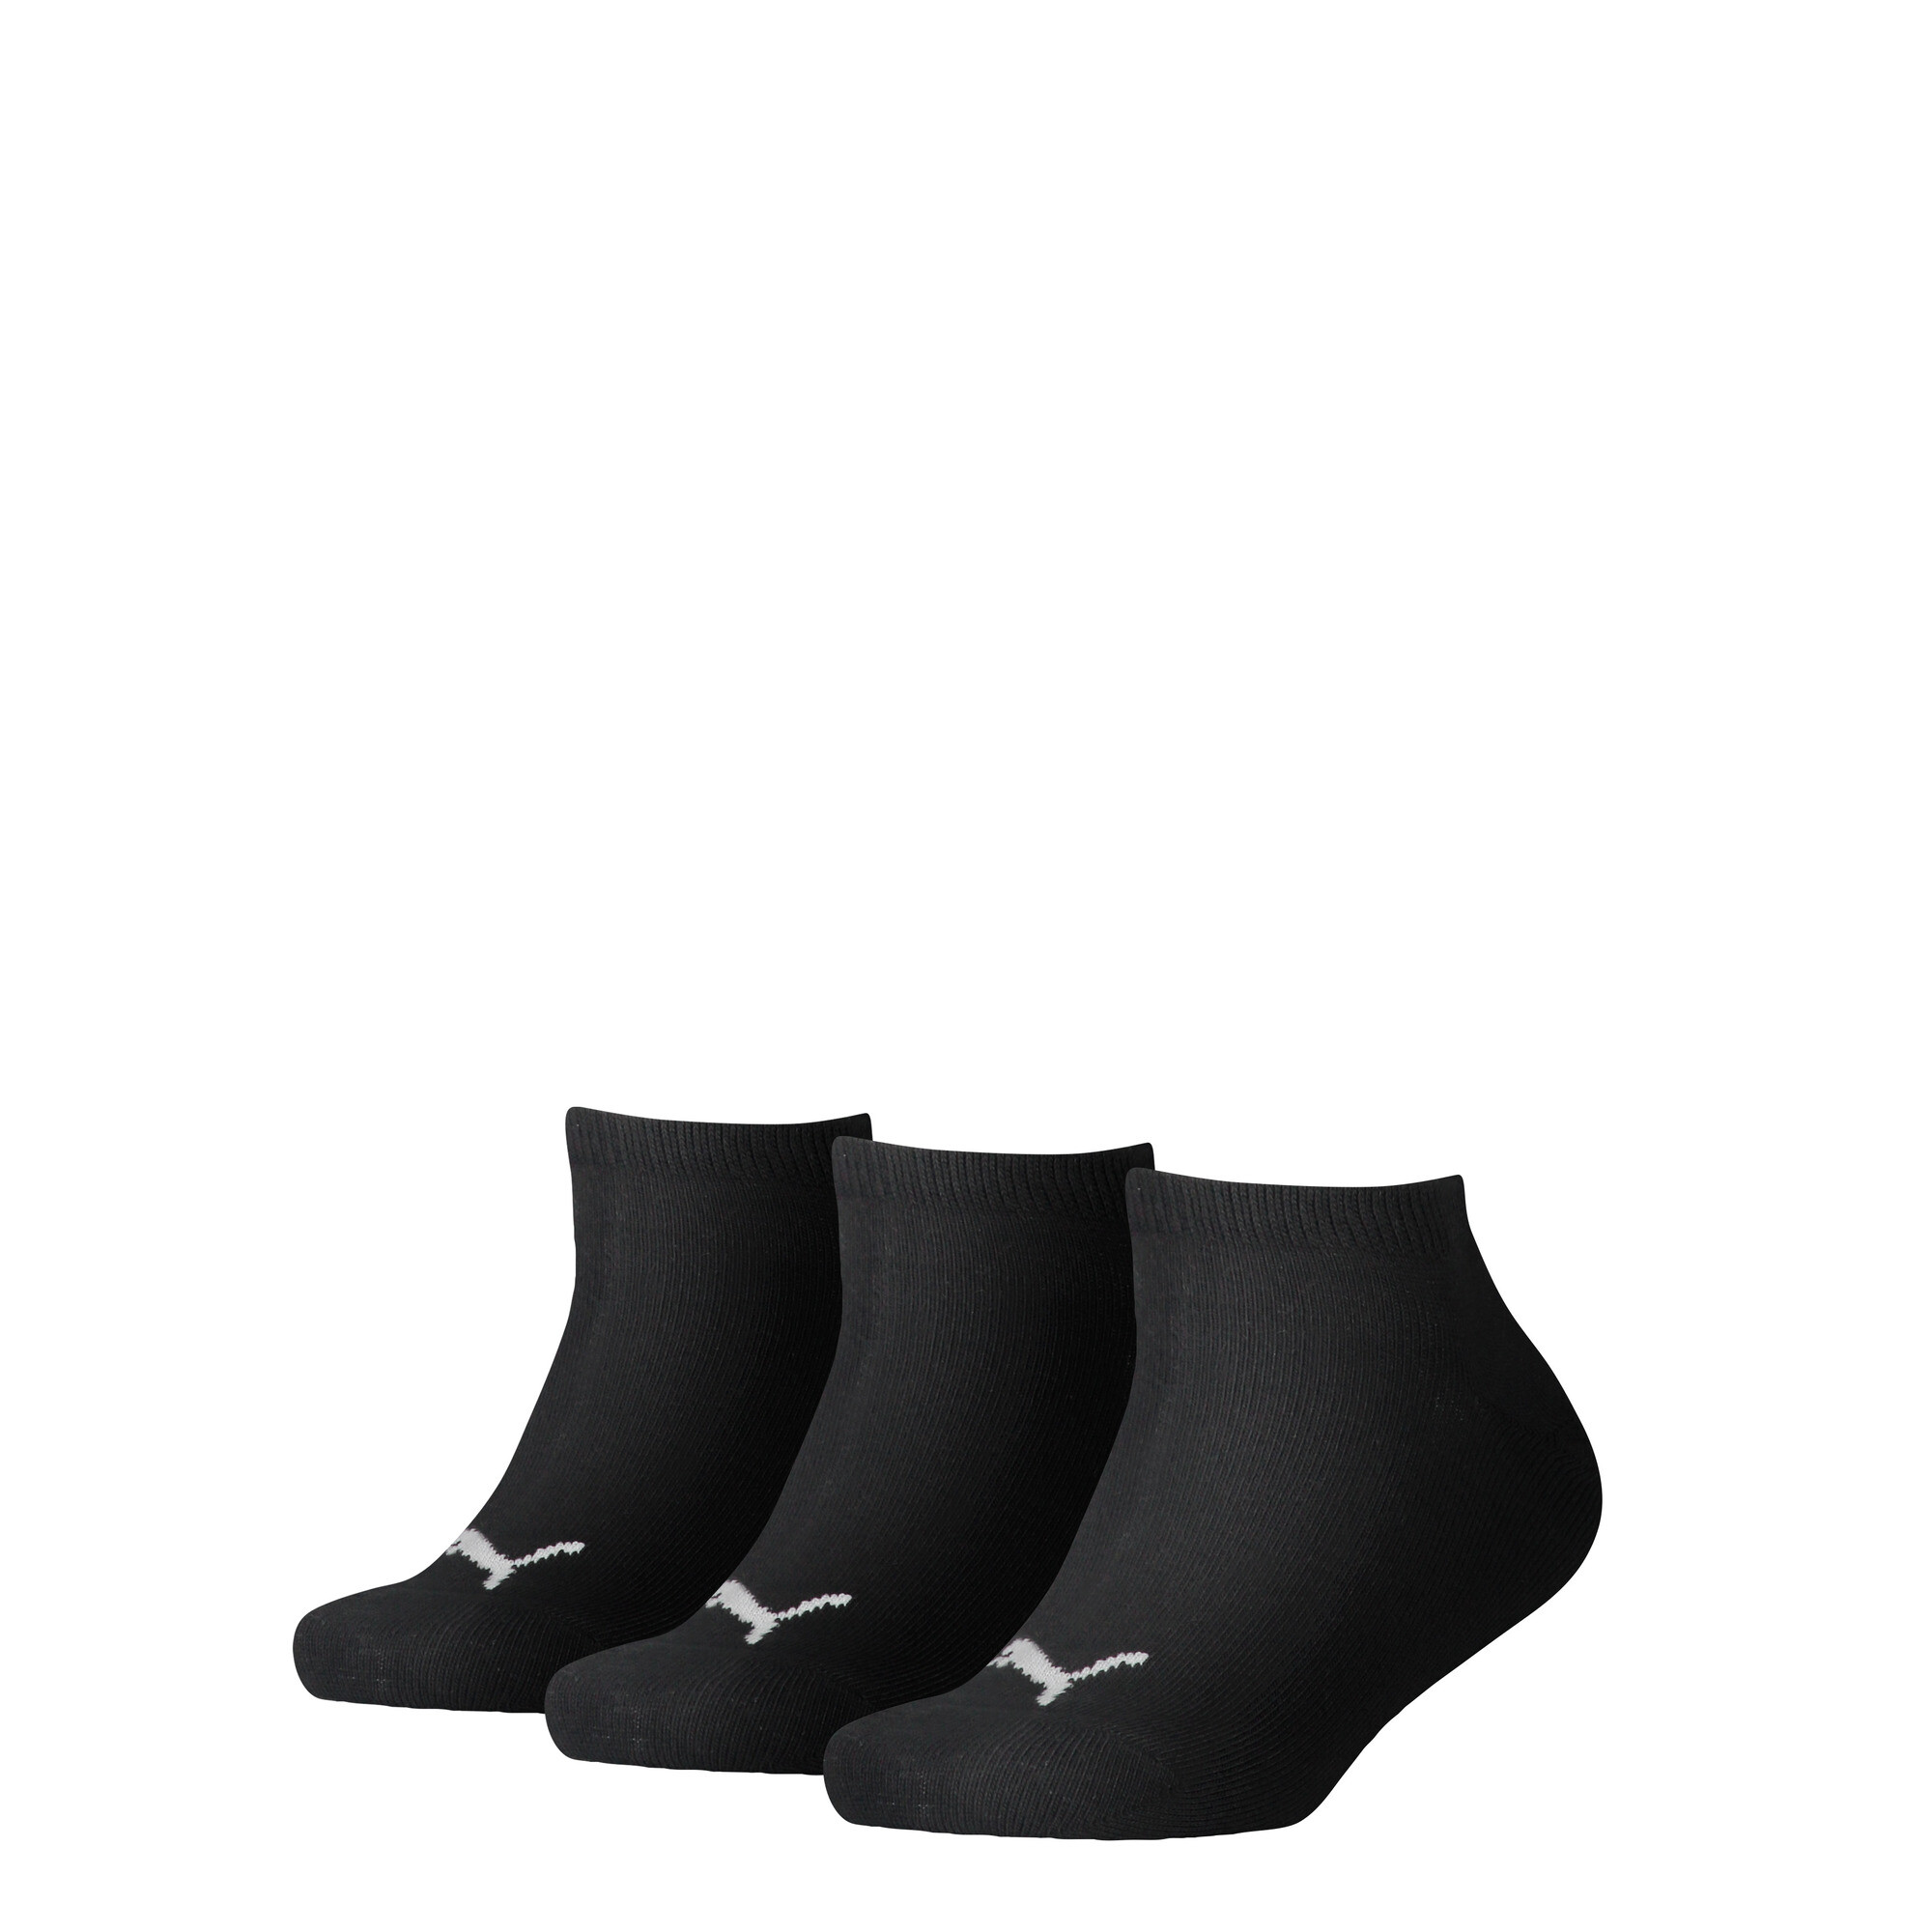 Kids' PUMA Invisible Socks 3 Pack In Black, Size 23-26